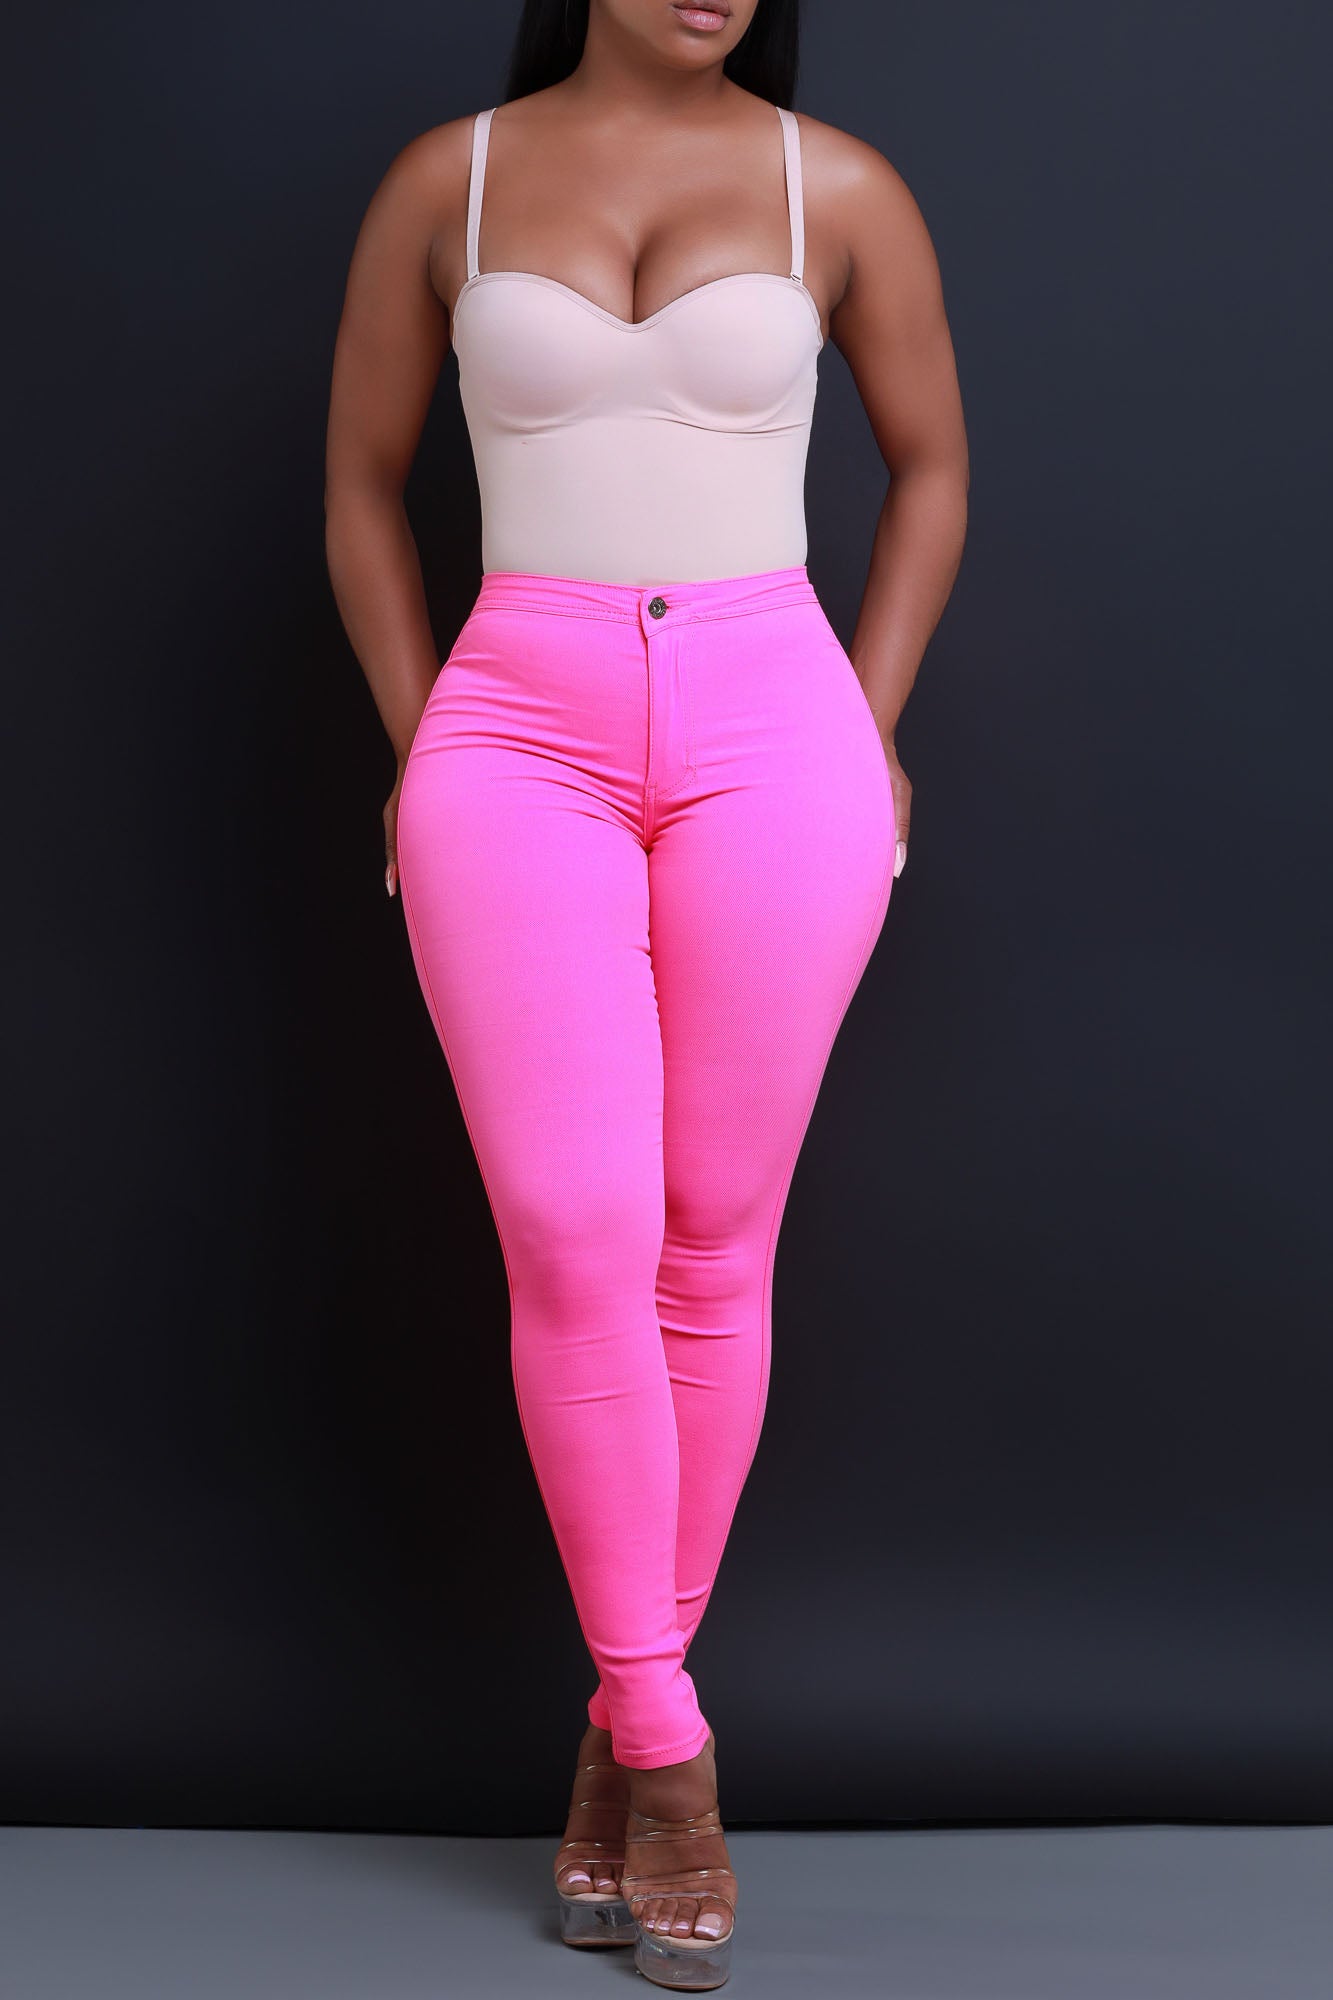 Ennyluap HOT Pink HIGH Waist Pants (10) at  Women's Clothing store